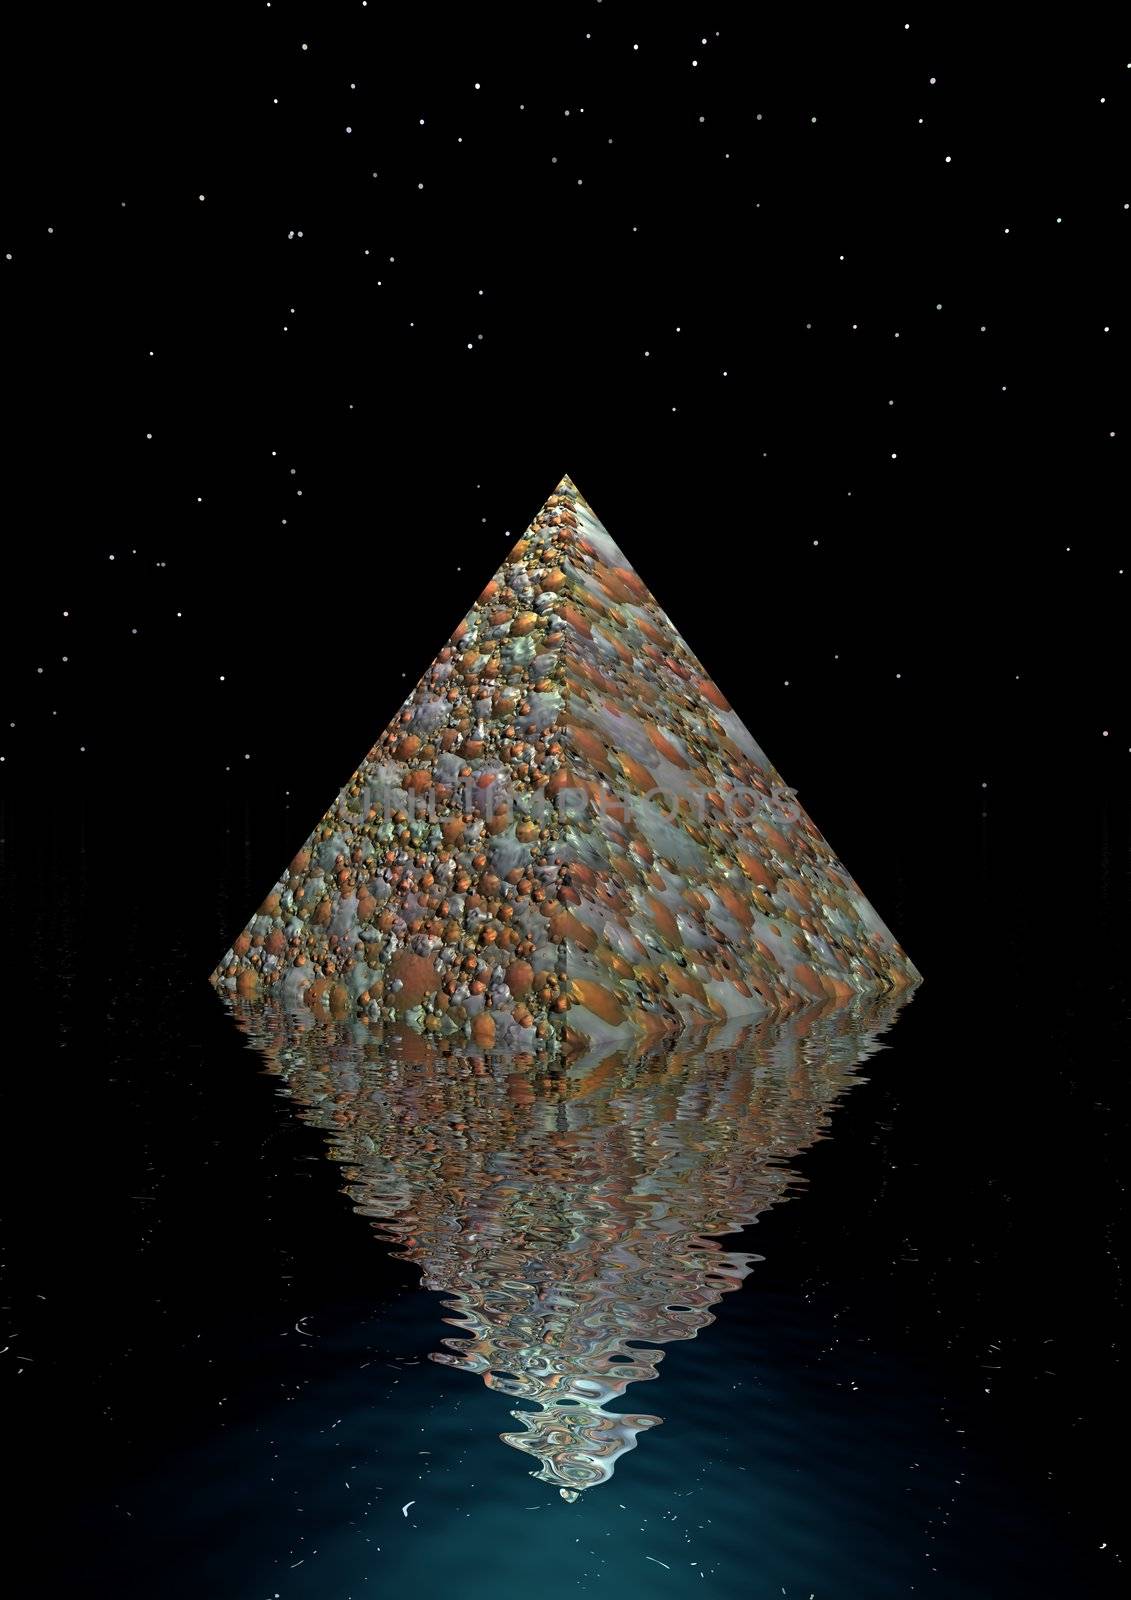 Pyramid colors and sea